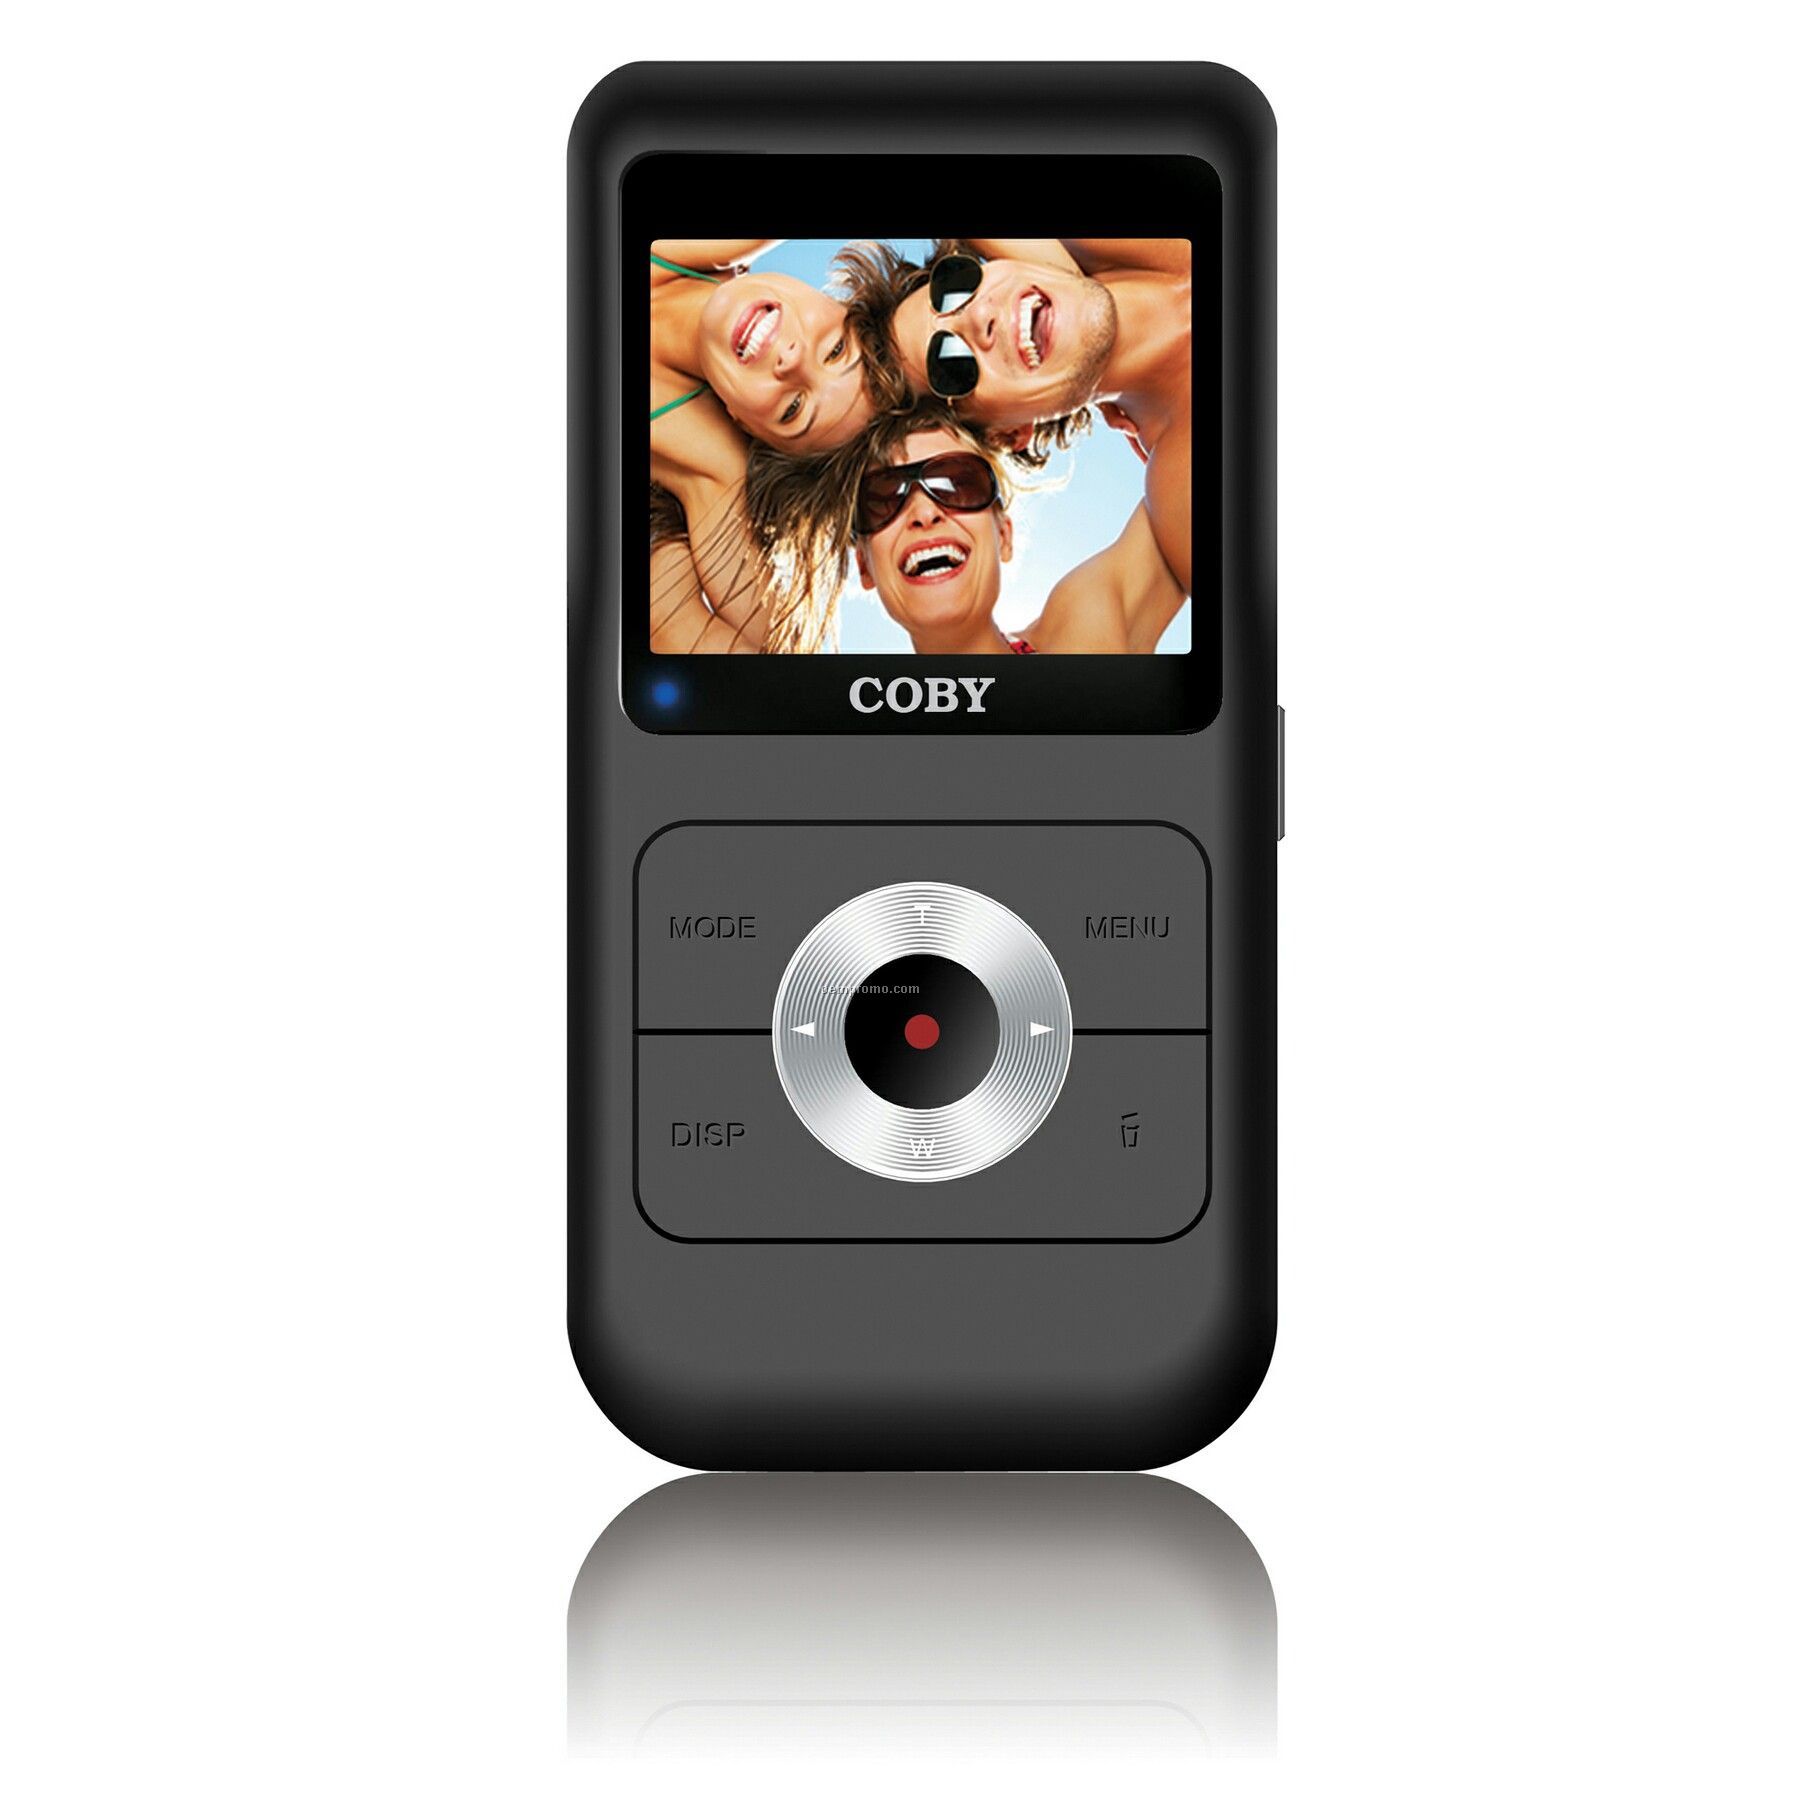 Coby Snapp Pocket Camcorder